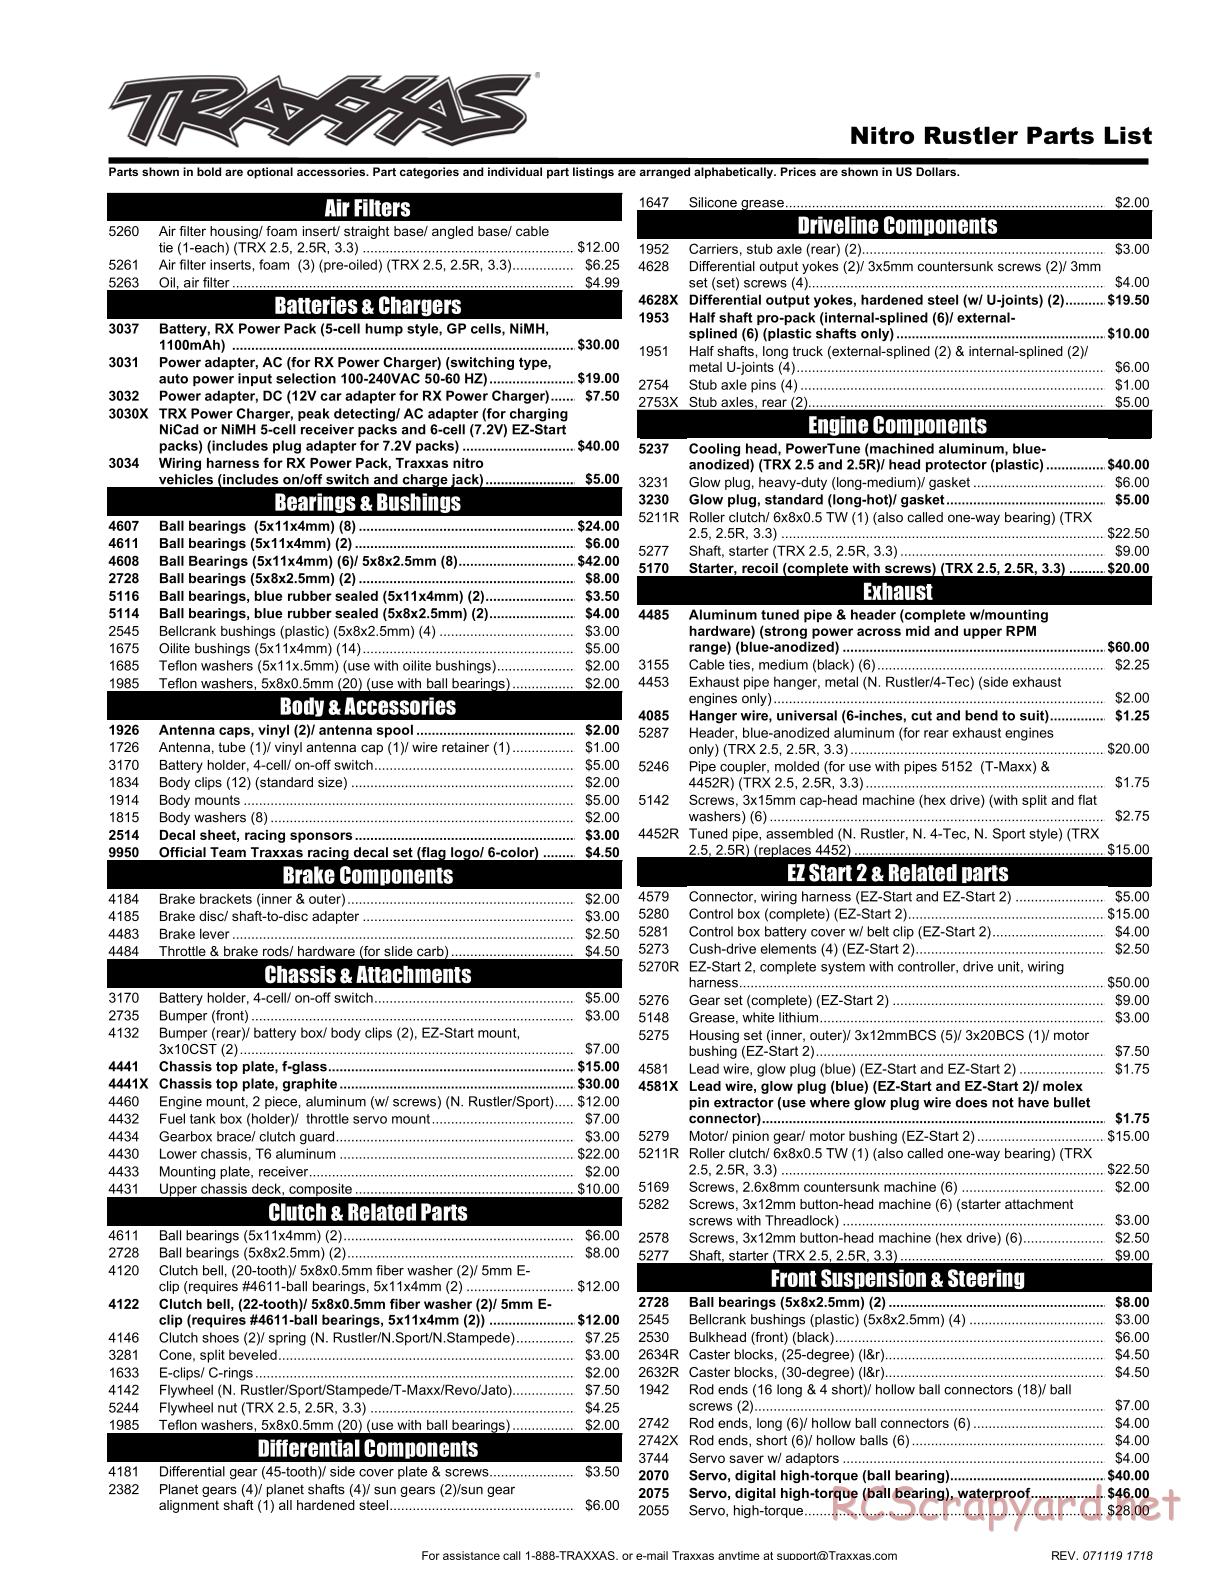 Traxxas - Nitro Rustler 2.5 (2003) - Parts List - Page 1